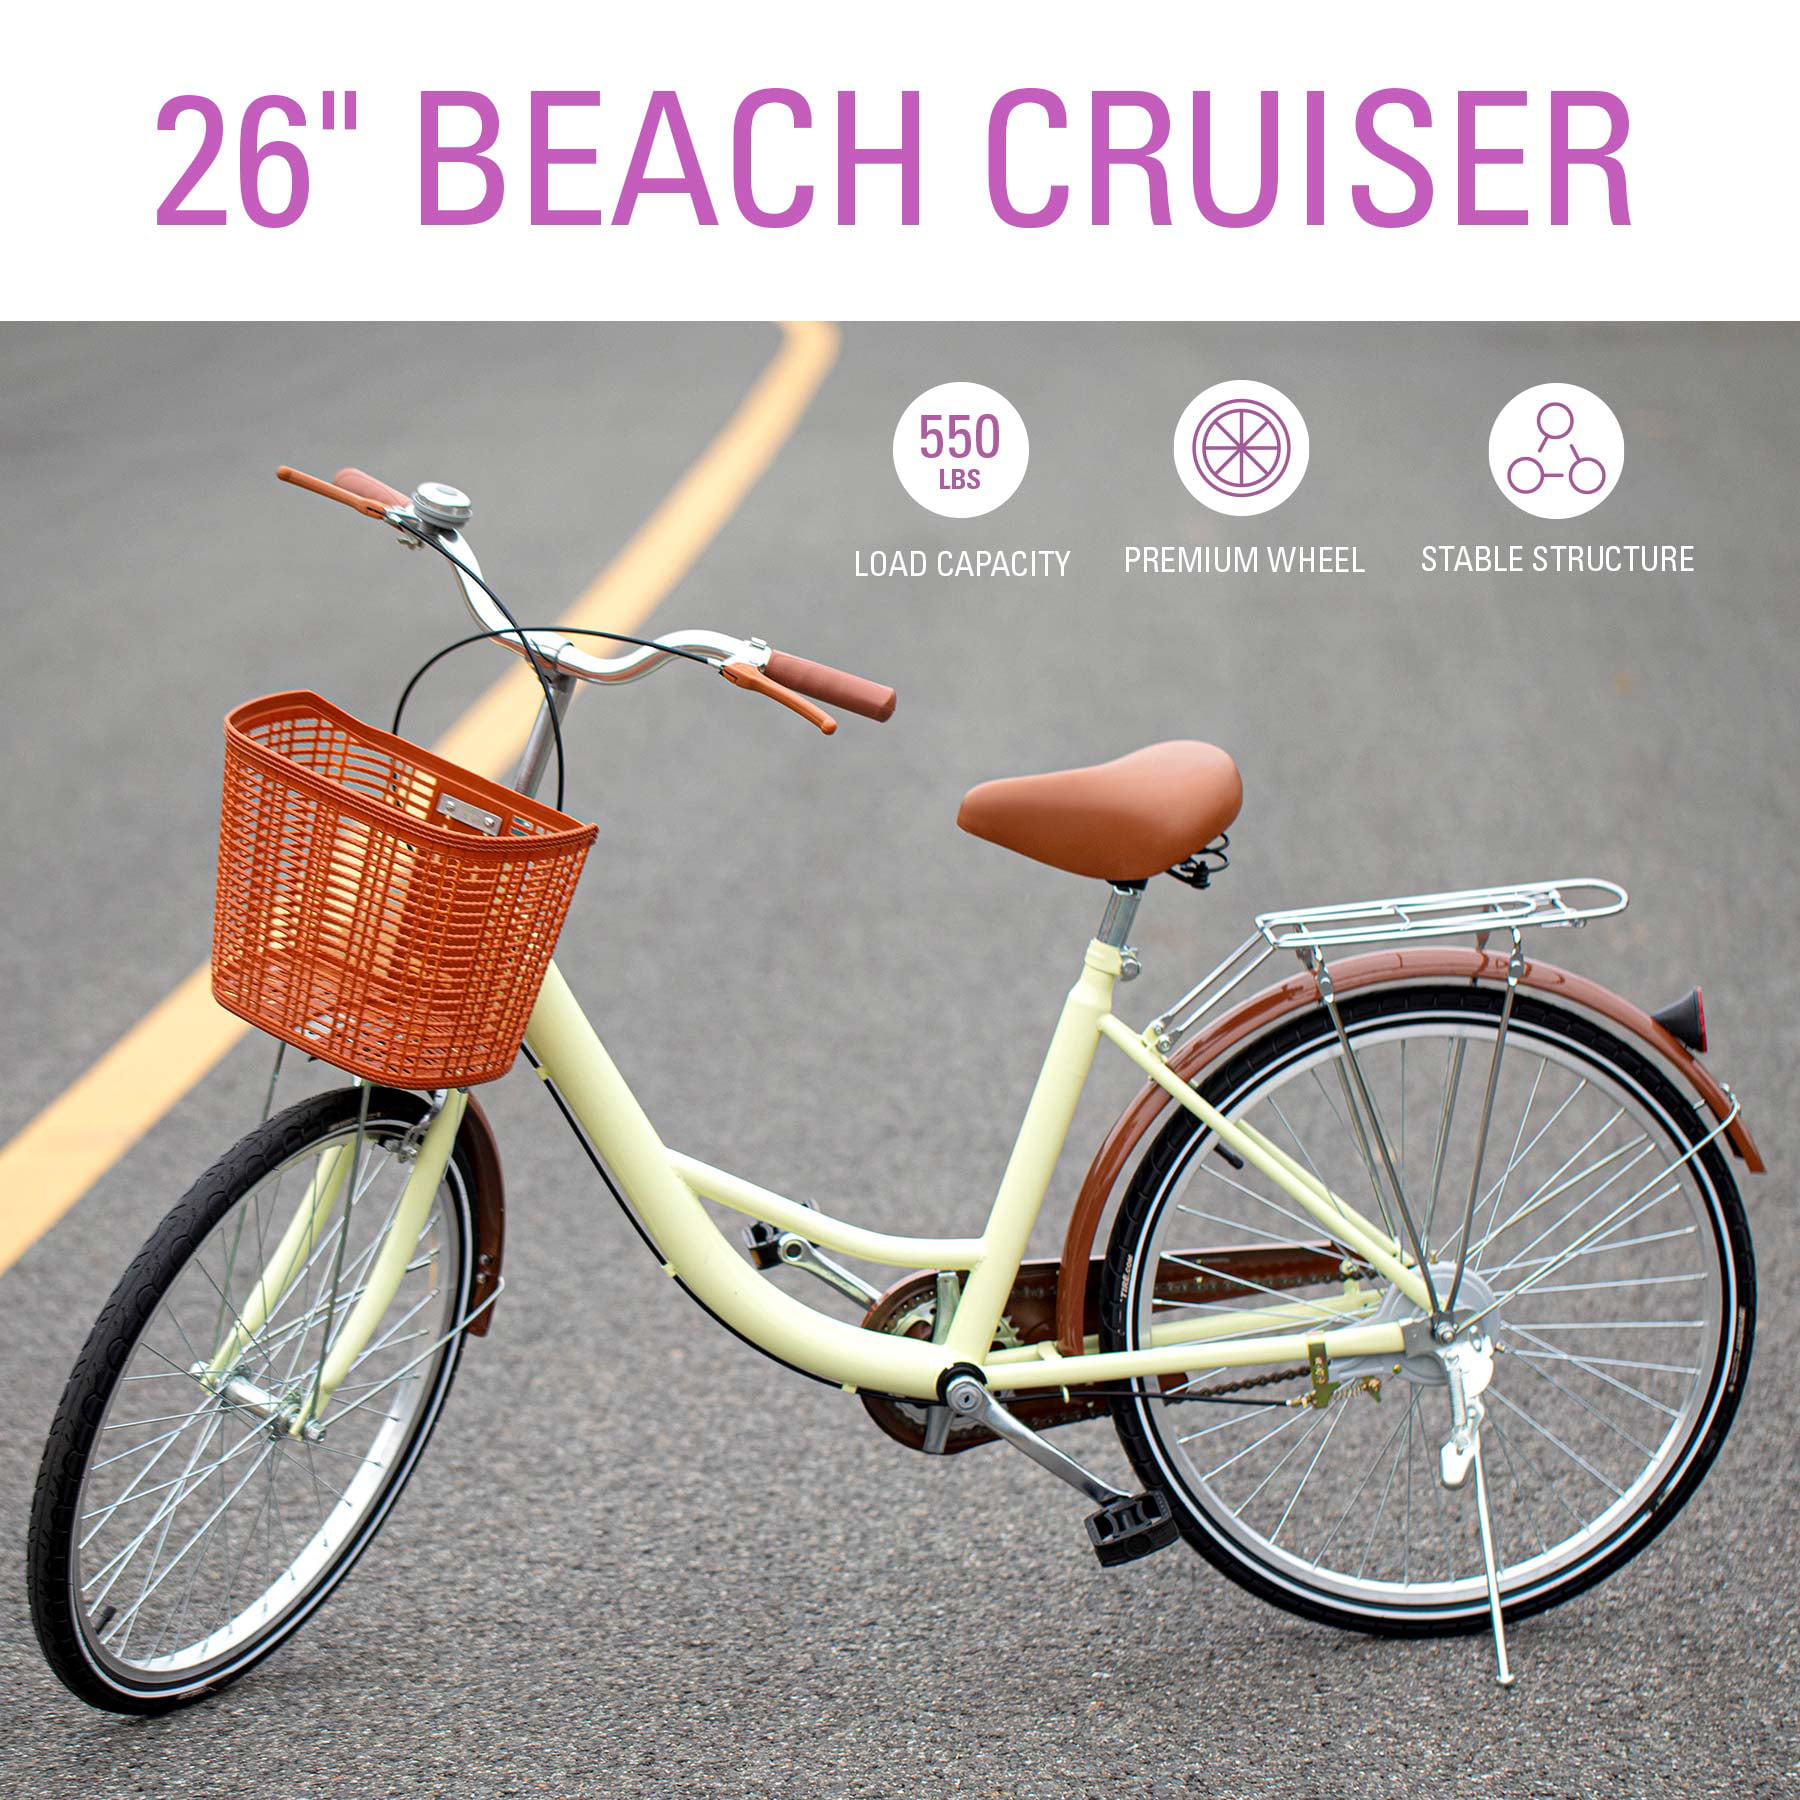 19” FRAME LADIES AMERICAN USA CALIFORNIAN STYLE BEACH CRUISER BIKE 6 SPEED CYCLE 